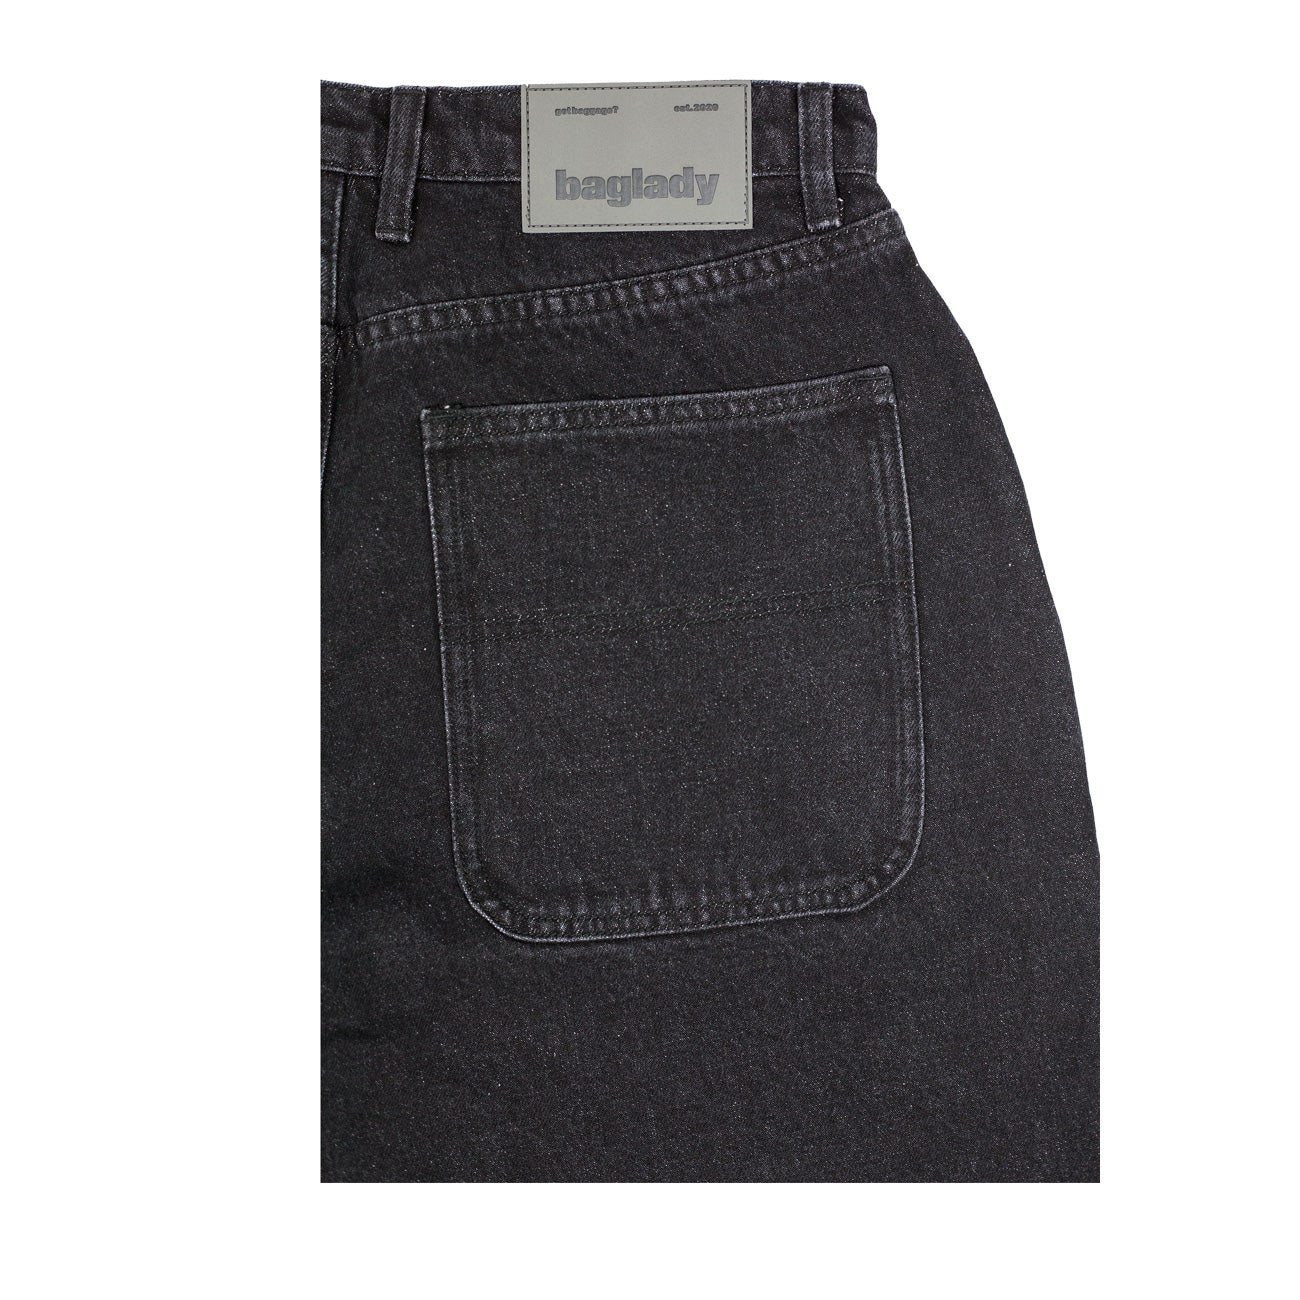 Baglady Supplies - Denim Jeans Black